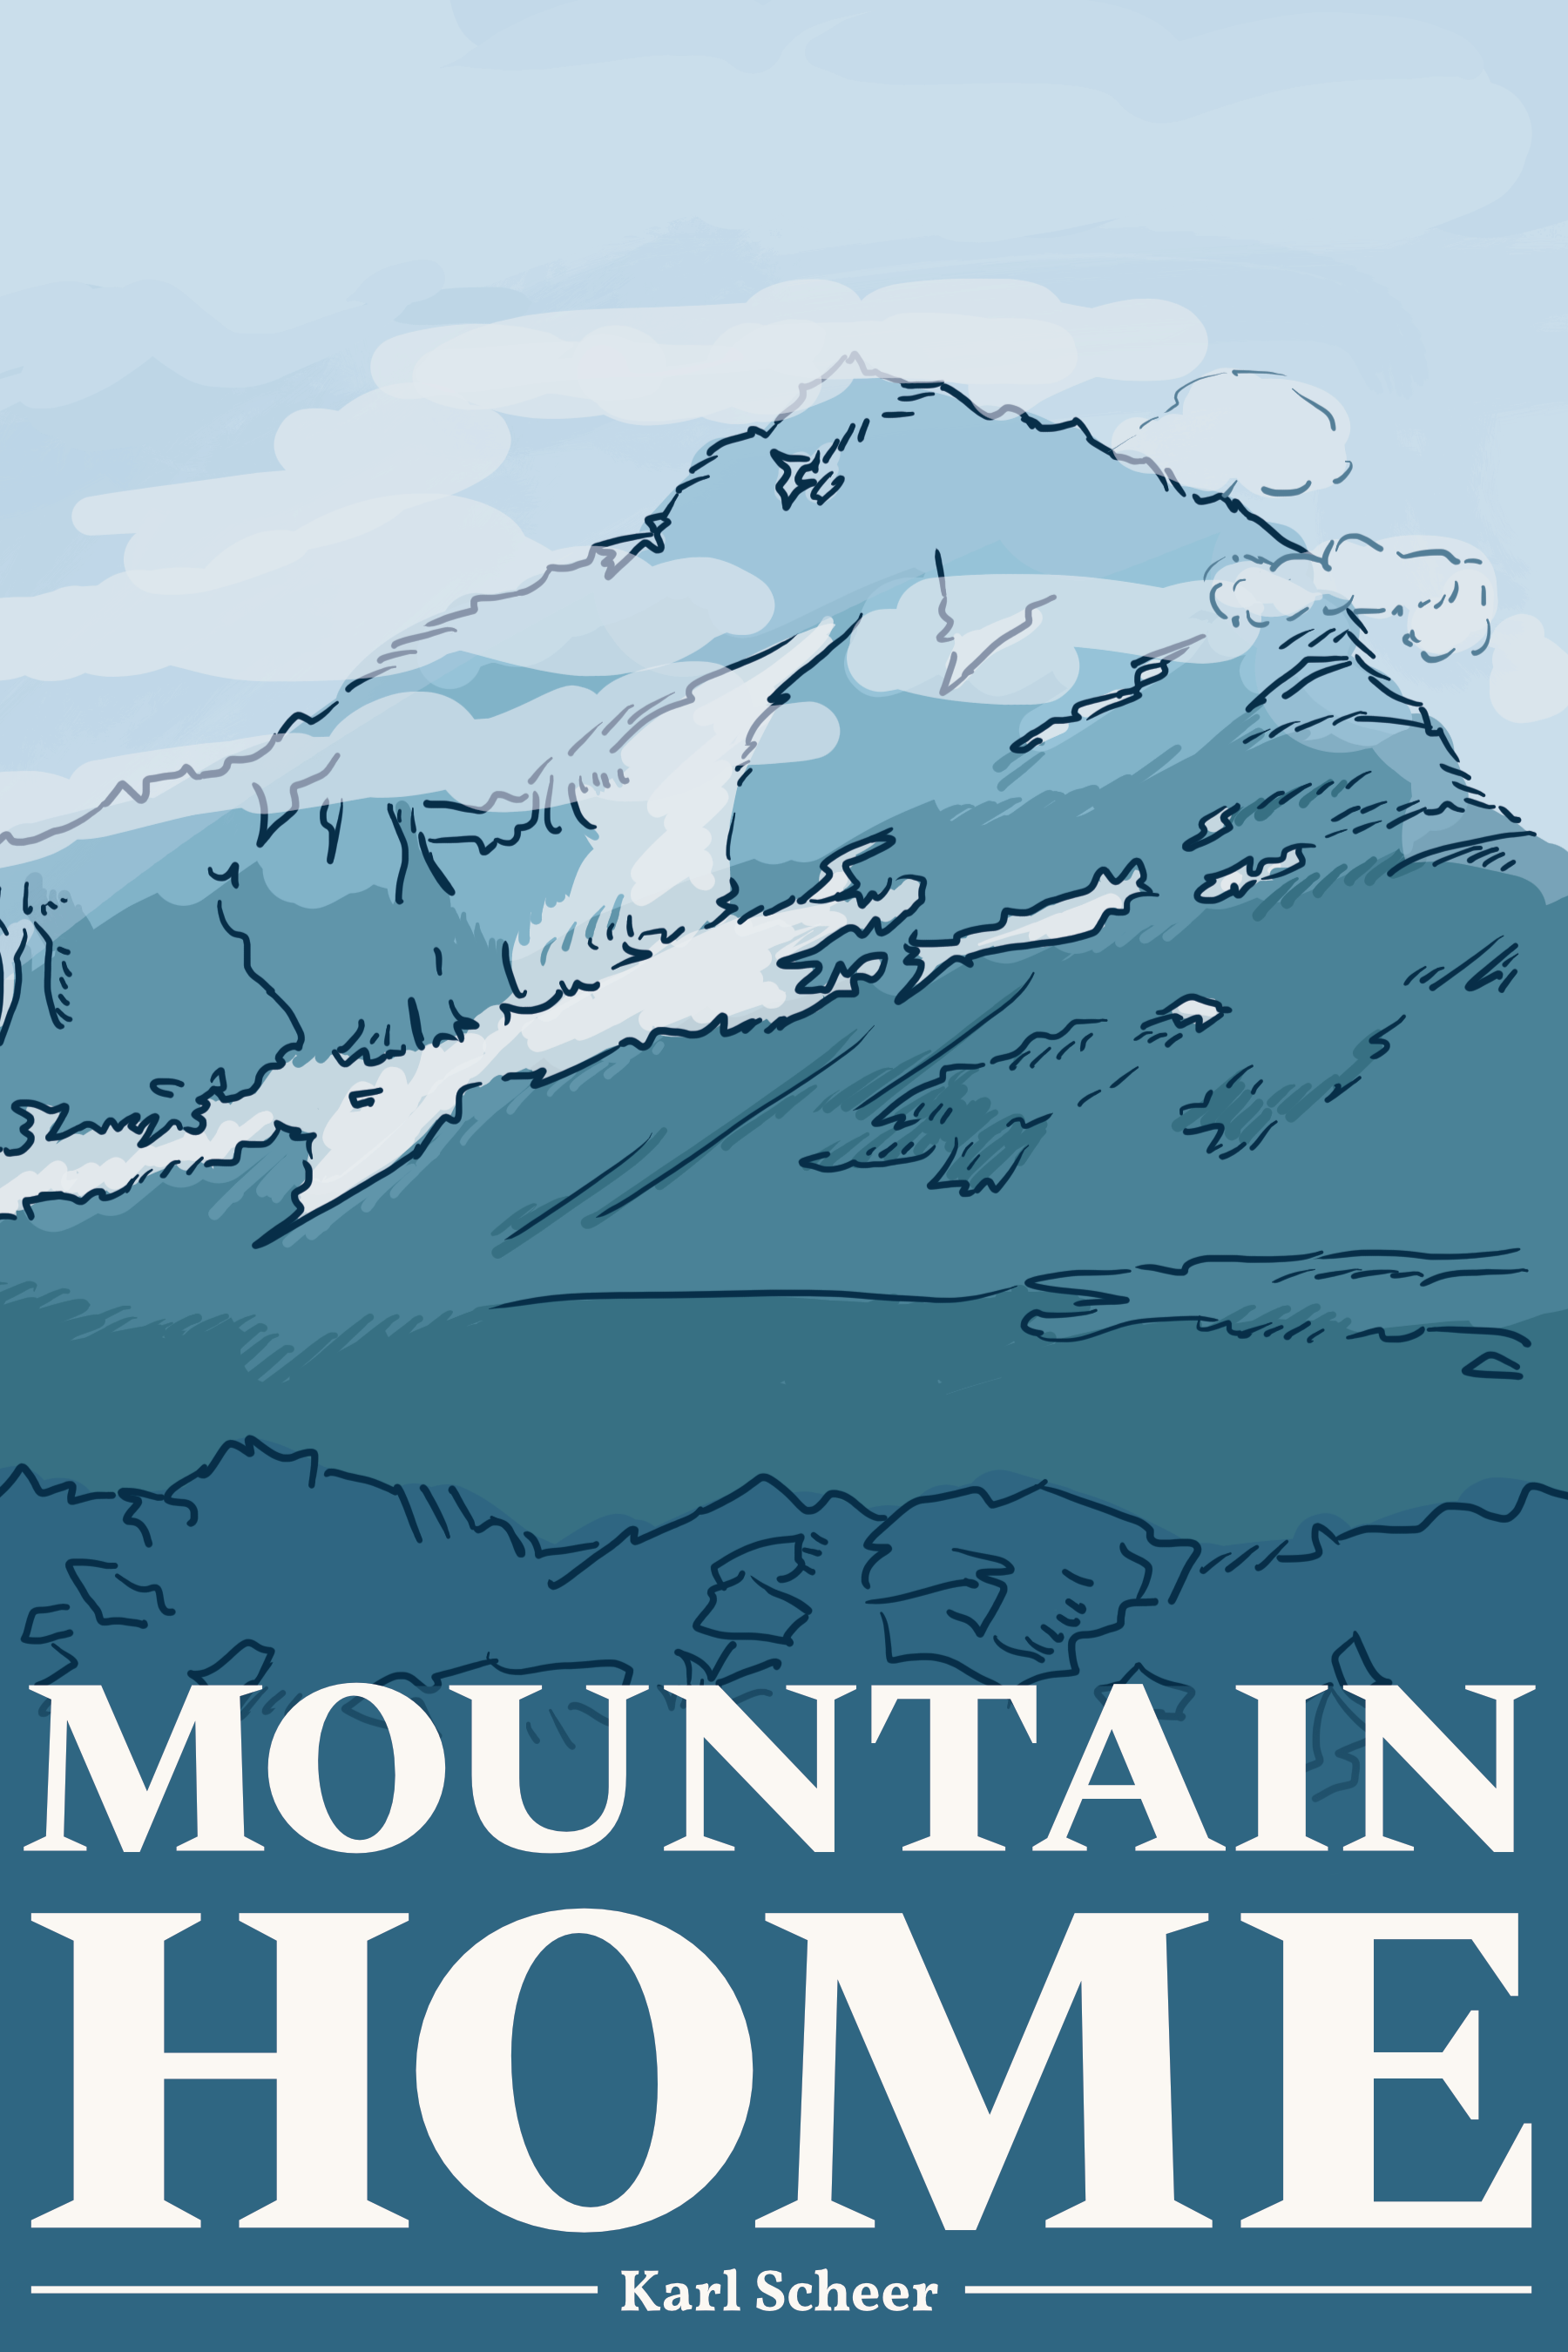 [Mountain Home]- Basalt Home on former dwarven metropolis (Years 1-5)